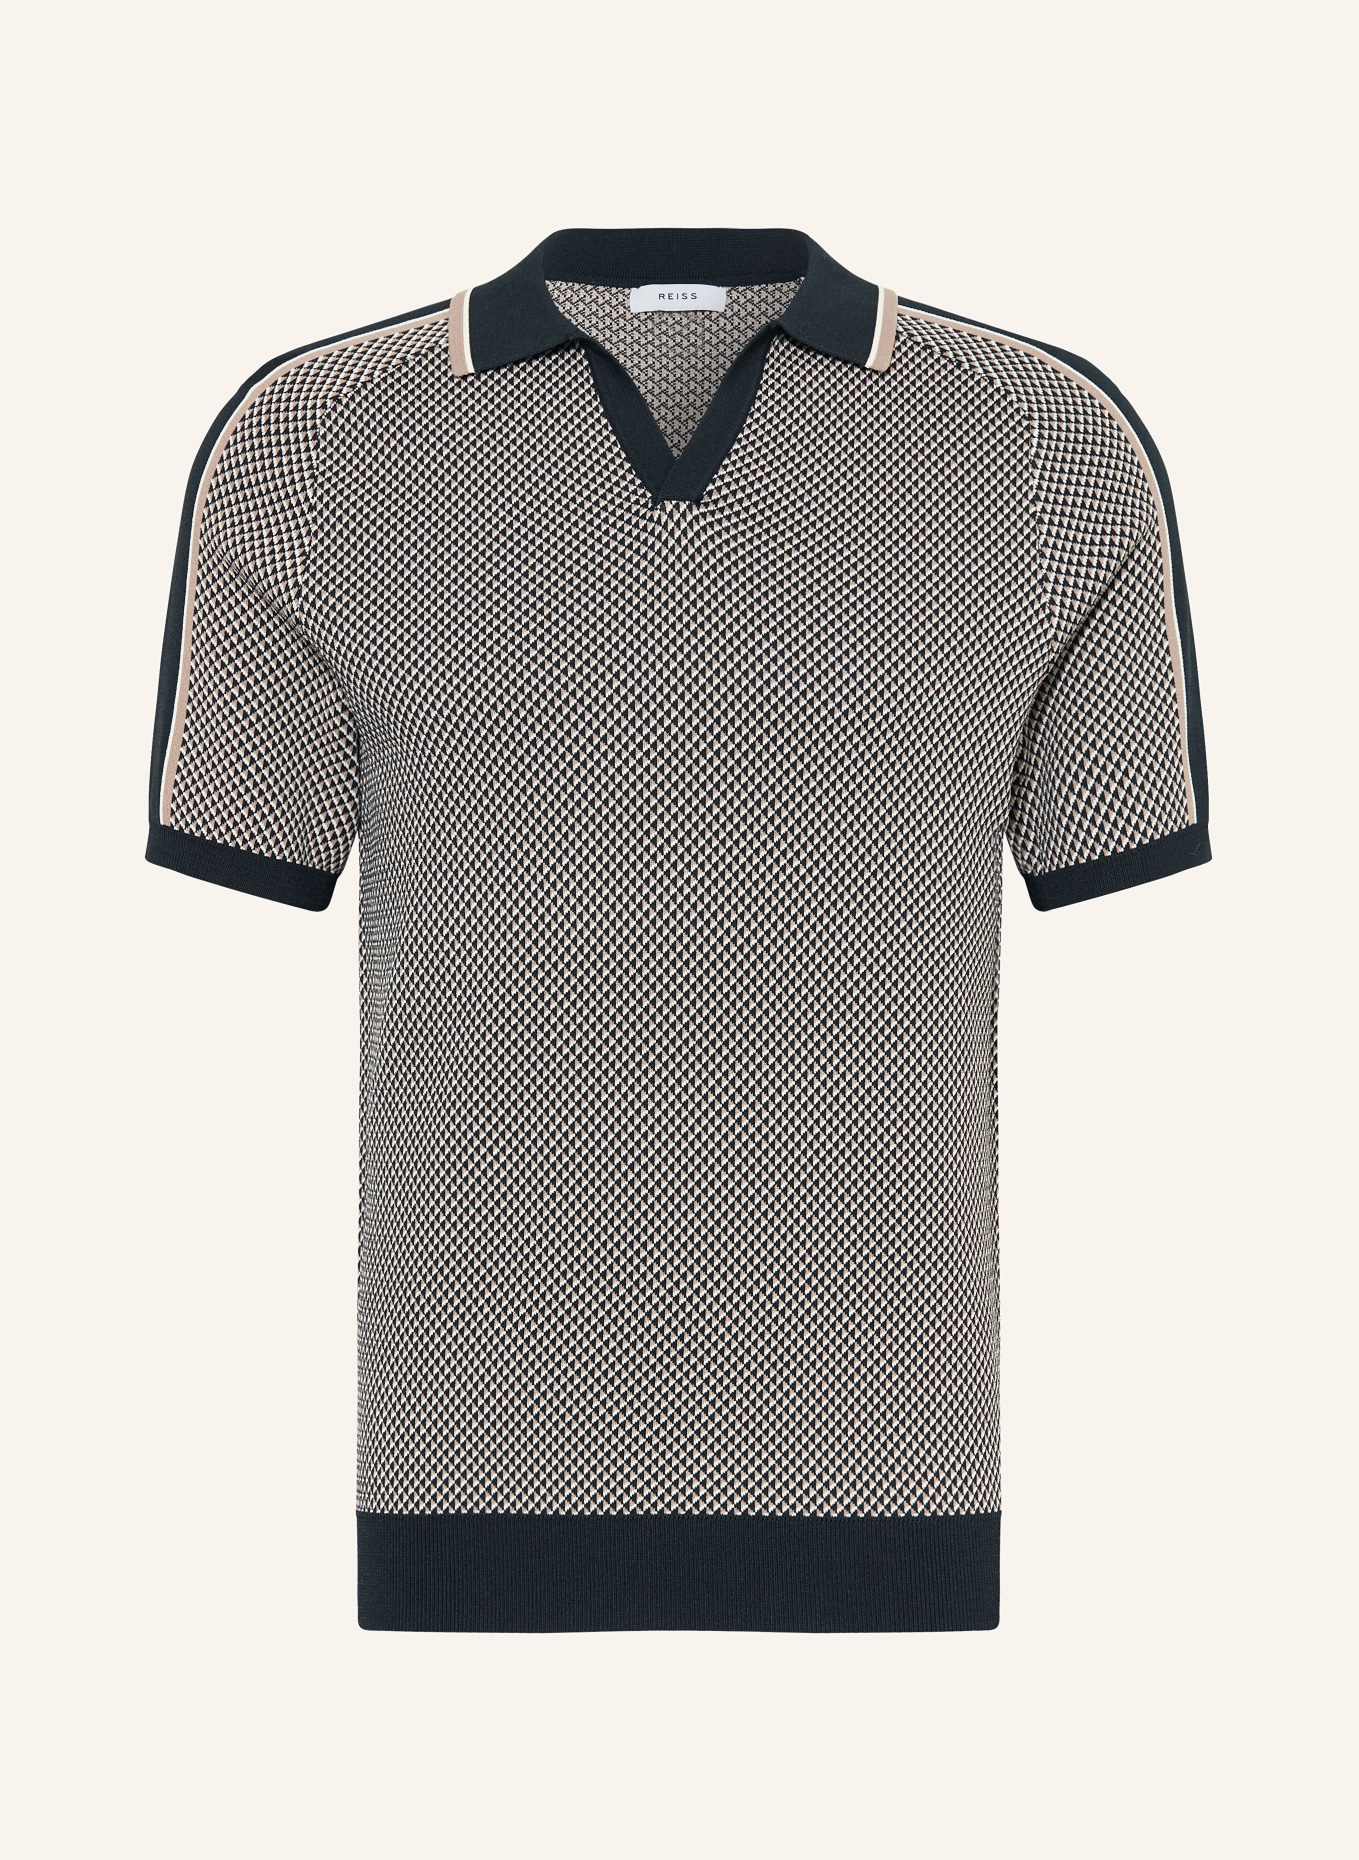 REISS Strick-Poloshirt BRUNSWICK, Farbe: SCHWARZ/ TAUPE/ ECRU (Bild 1)